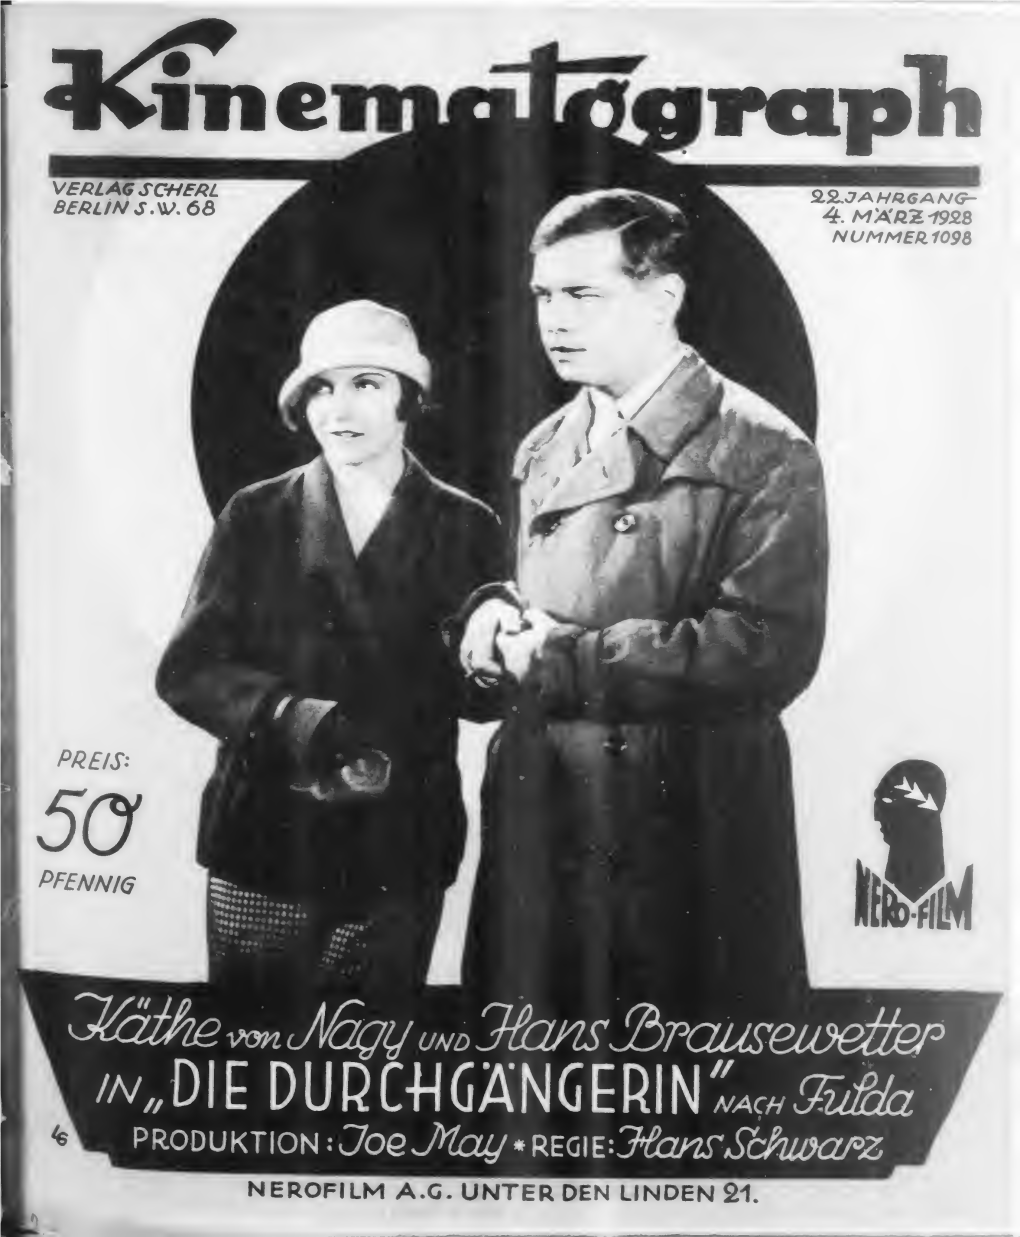 Der Kinematograph (March 1928)